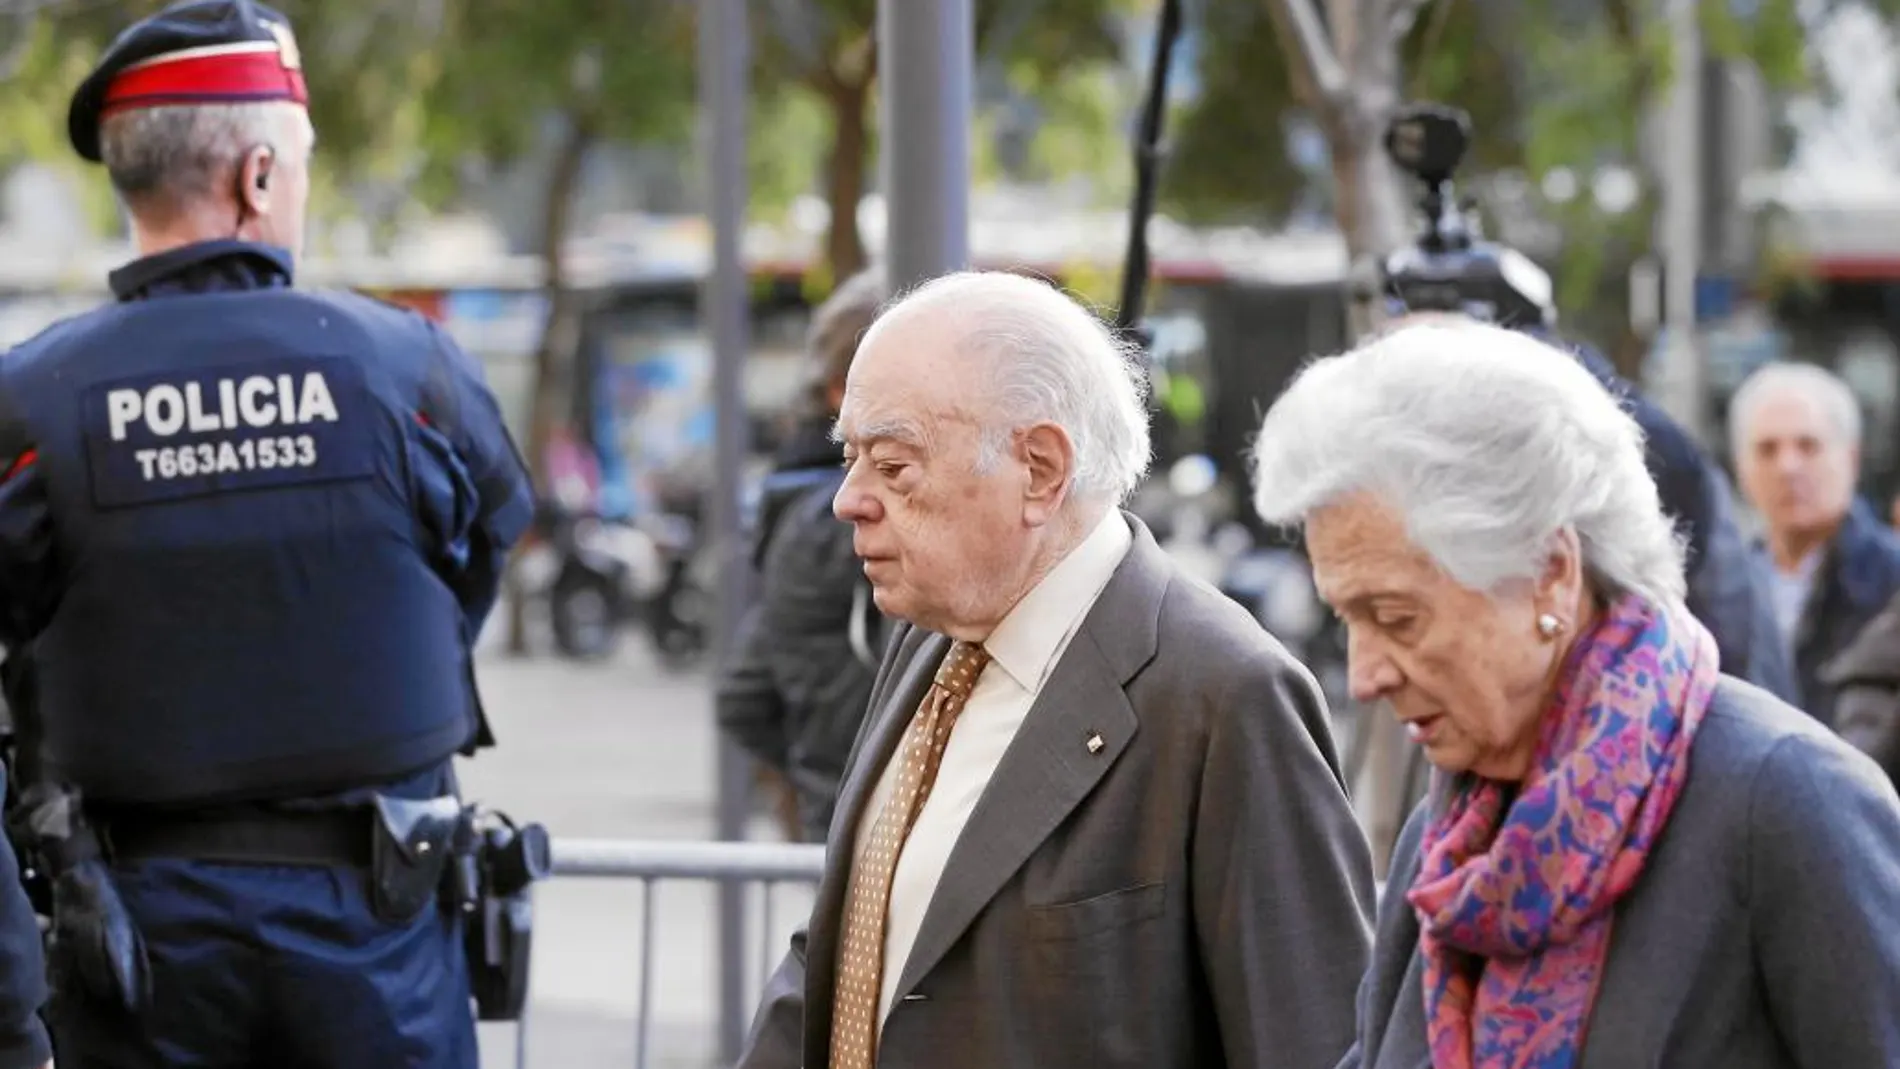 En la imagen, el ex president de la Generalitat, Jordi Pujol, y su esposa, Marta Ferrusola